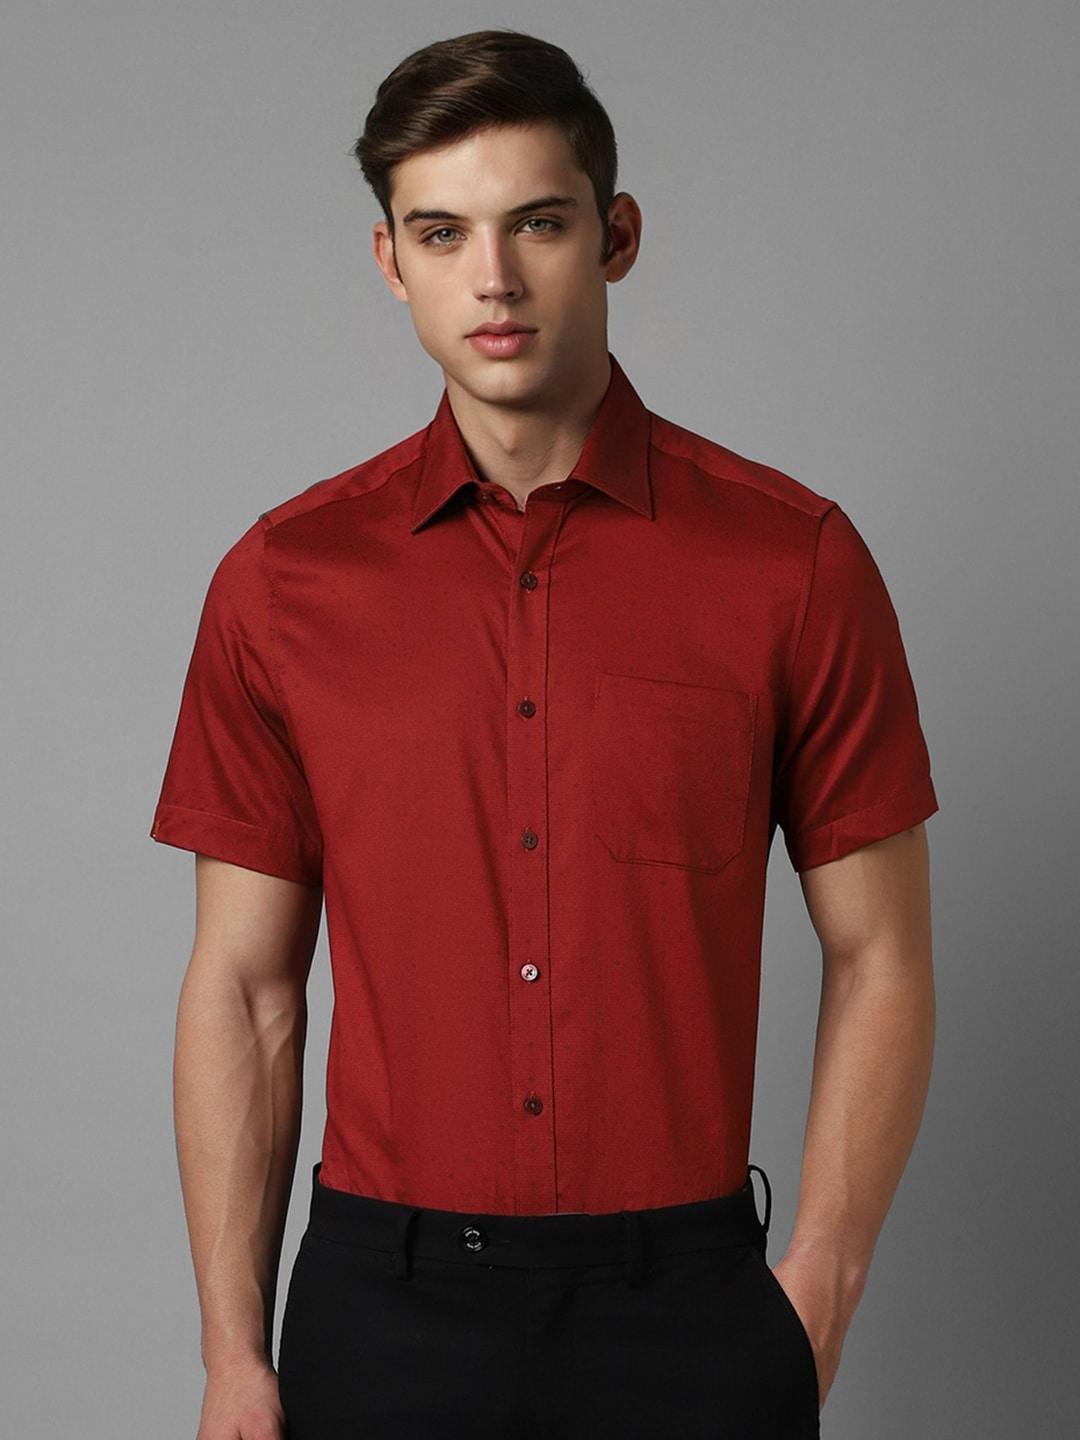 louis philippe self design spread collar pure cotton formal shirt